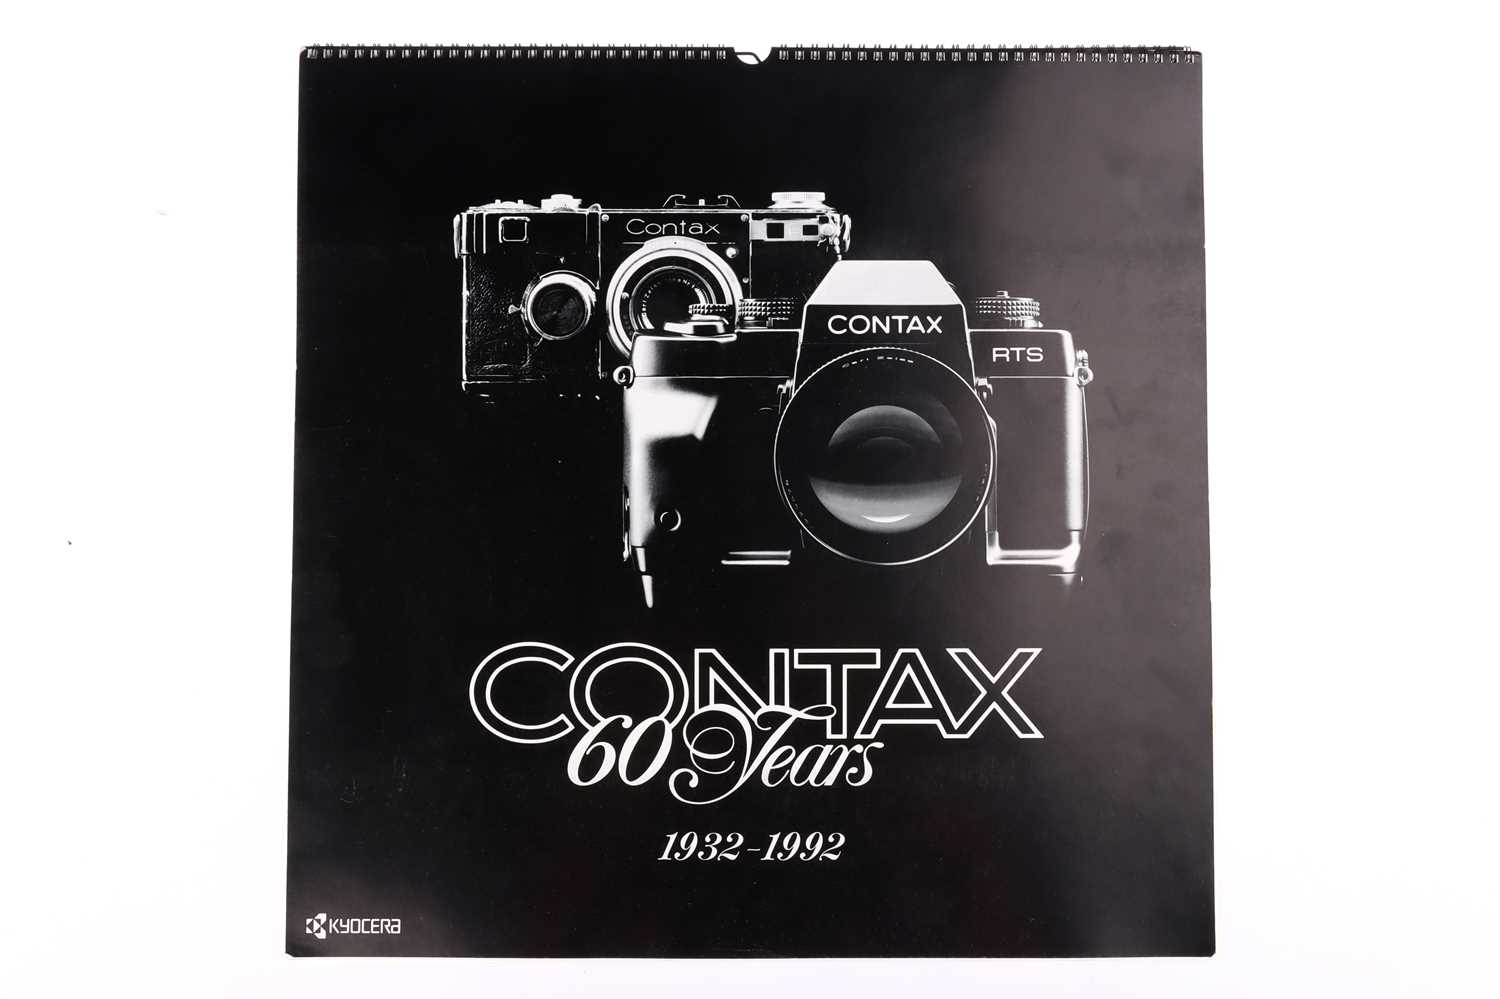 Lot 62 - A Contax 60 Years 1932-1992 Anniversary Calendar